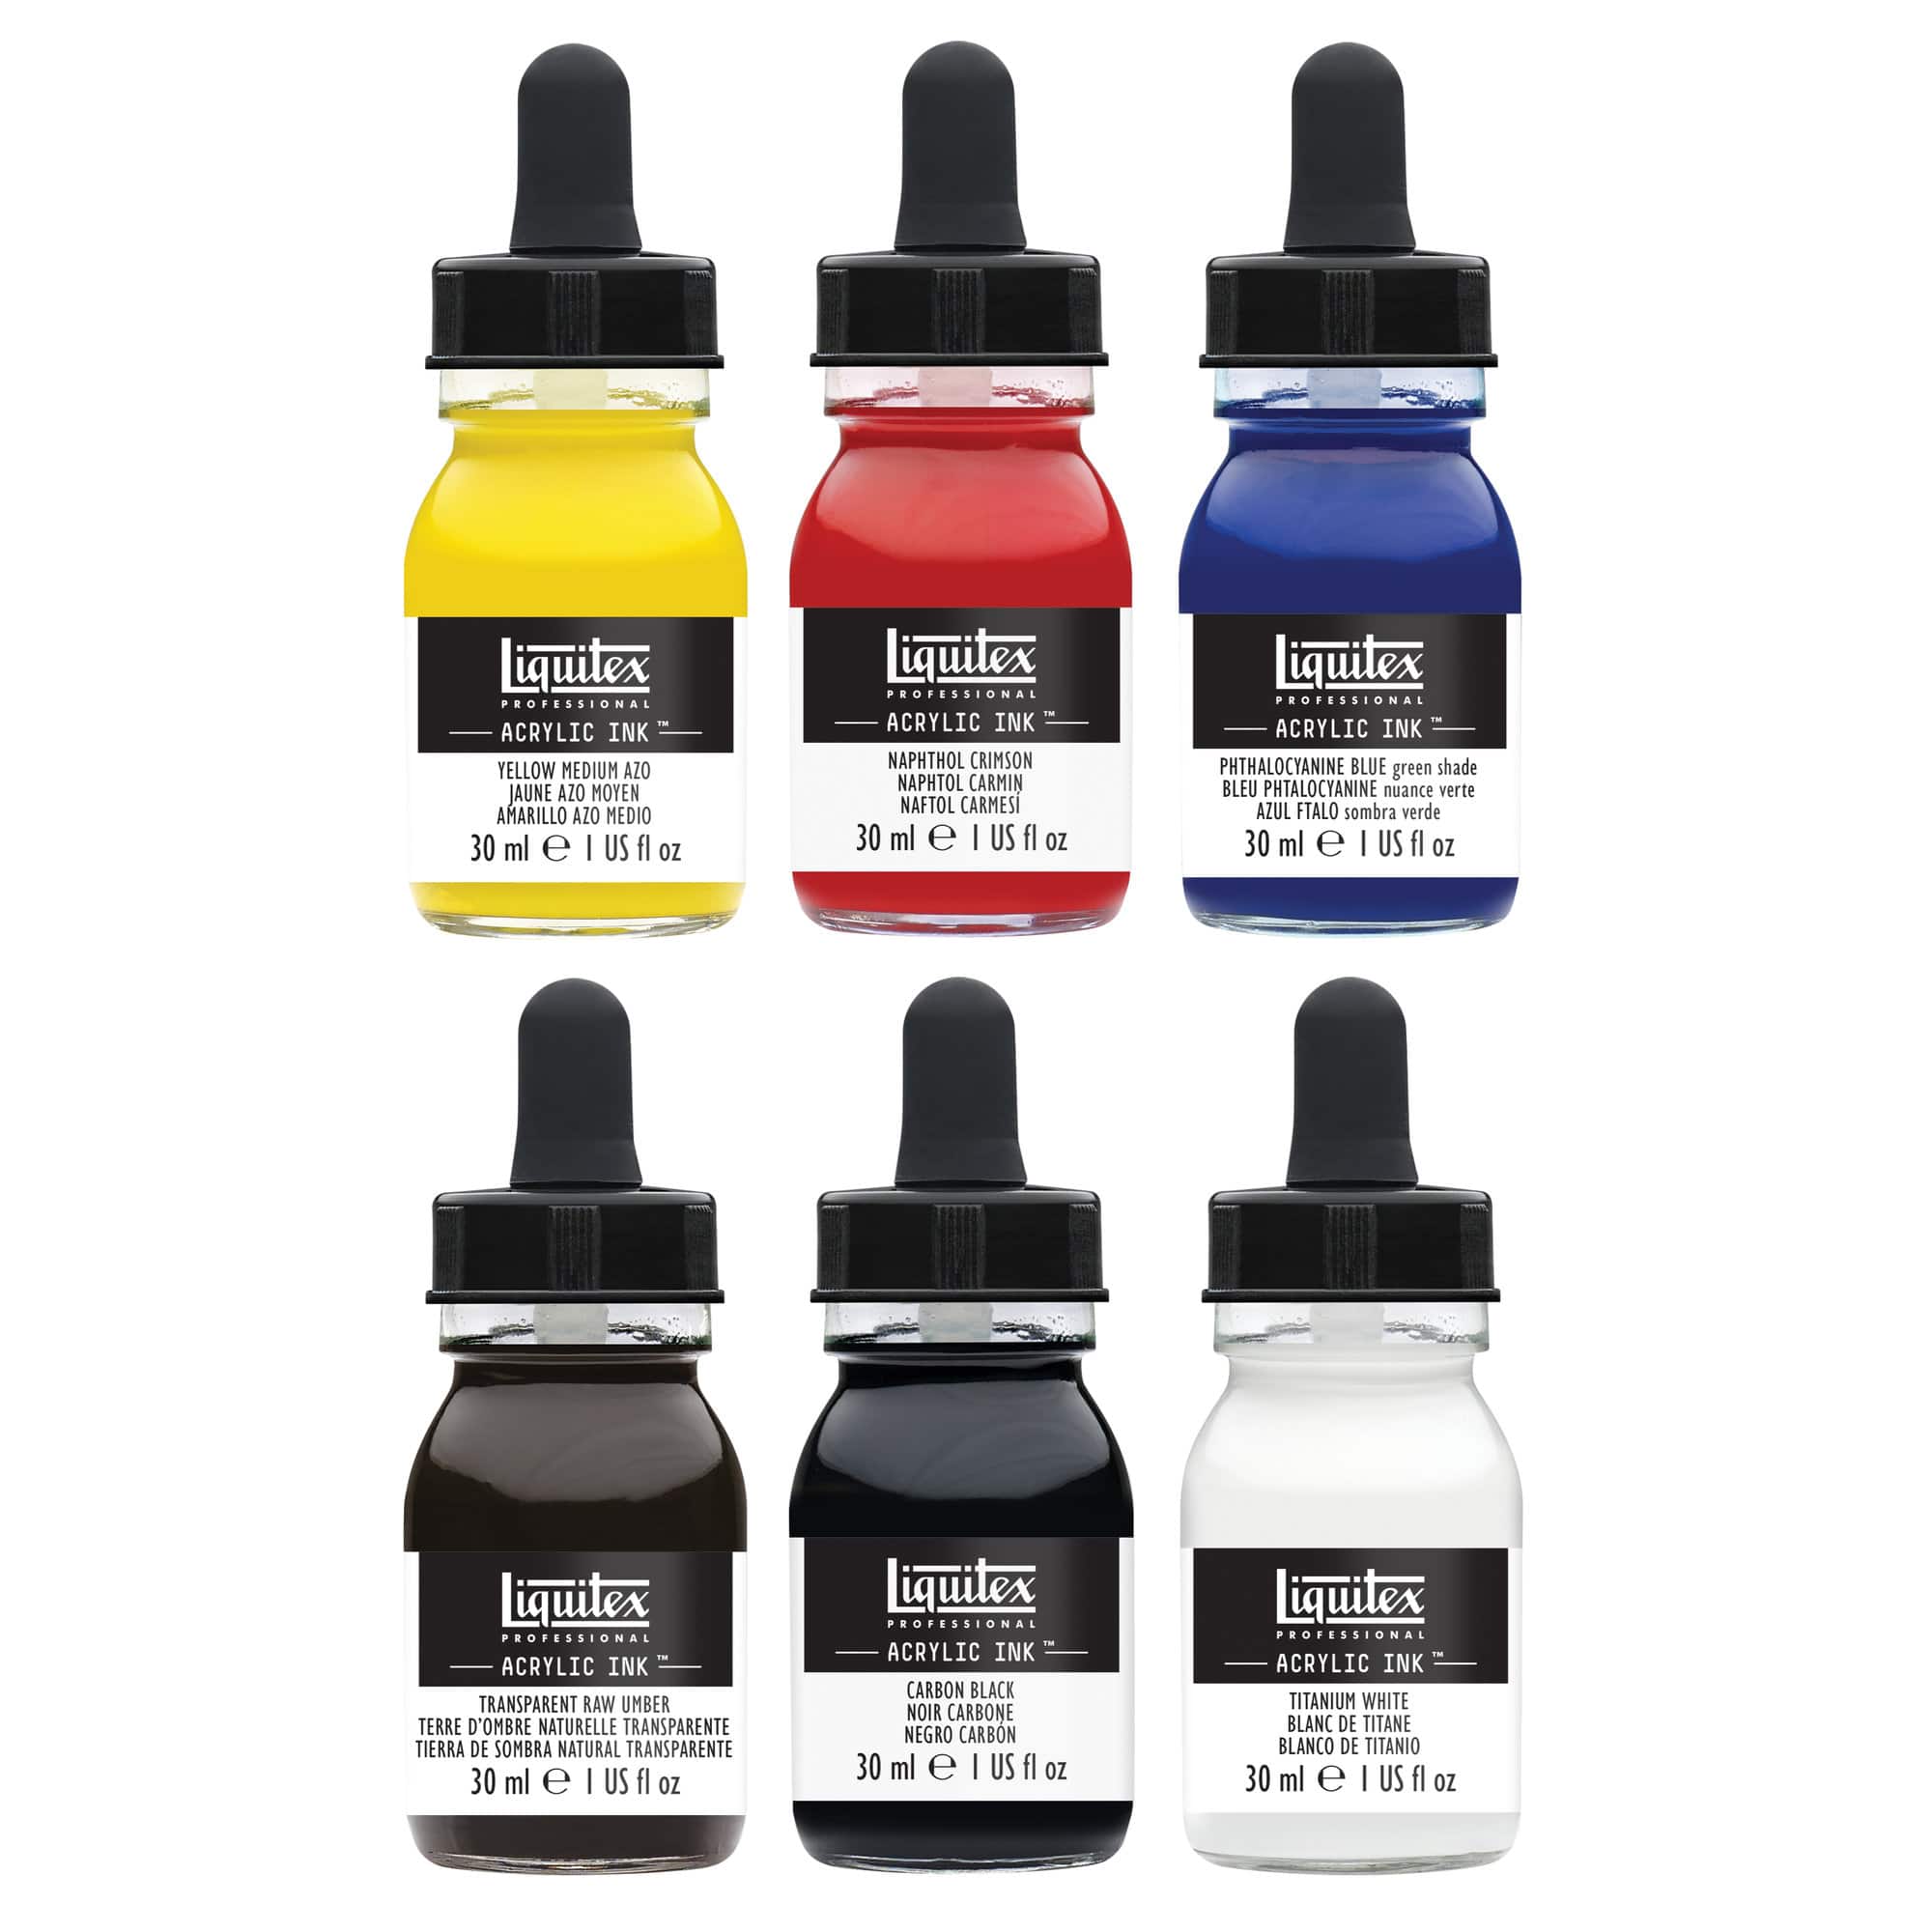 Liquitex&#xAE; Professional Acrylic&#x2122; Ink Essential Set